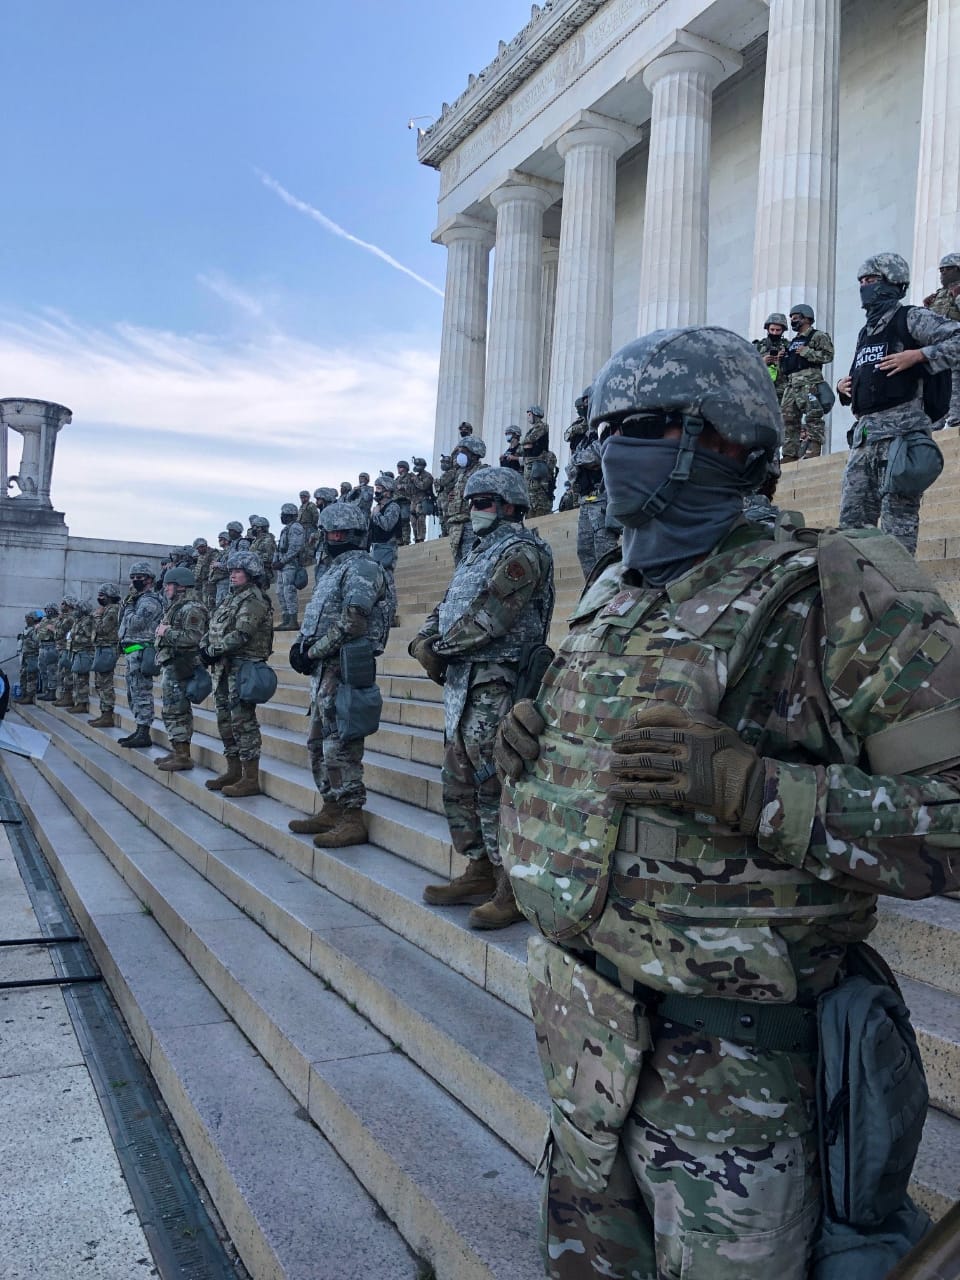 Lincoln Memorial, Washington DC: "Democracia" com violência de Estado